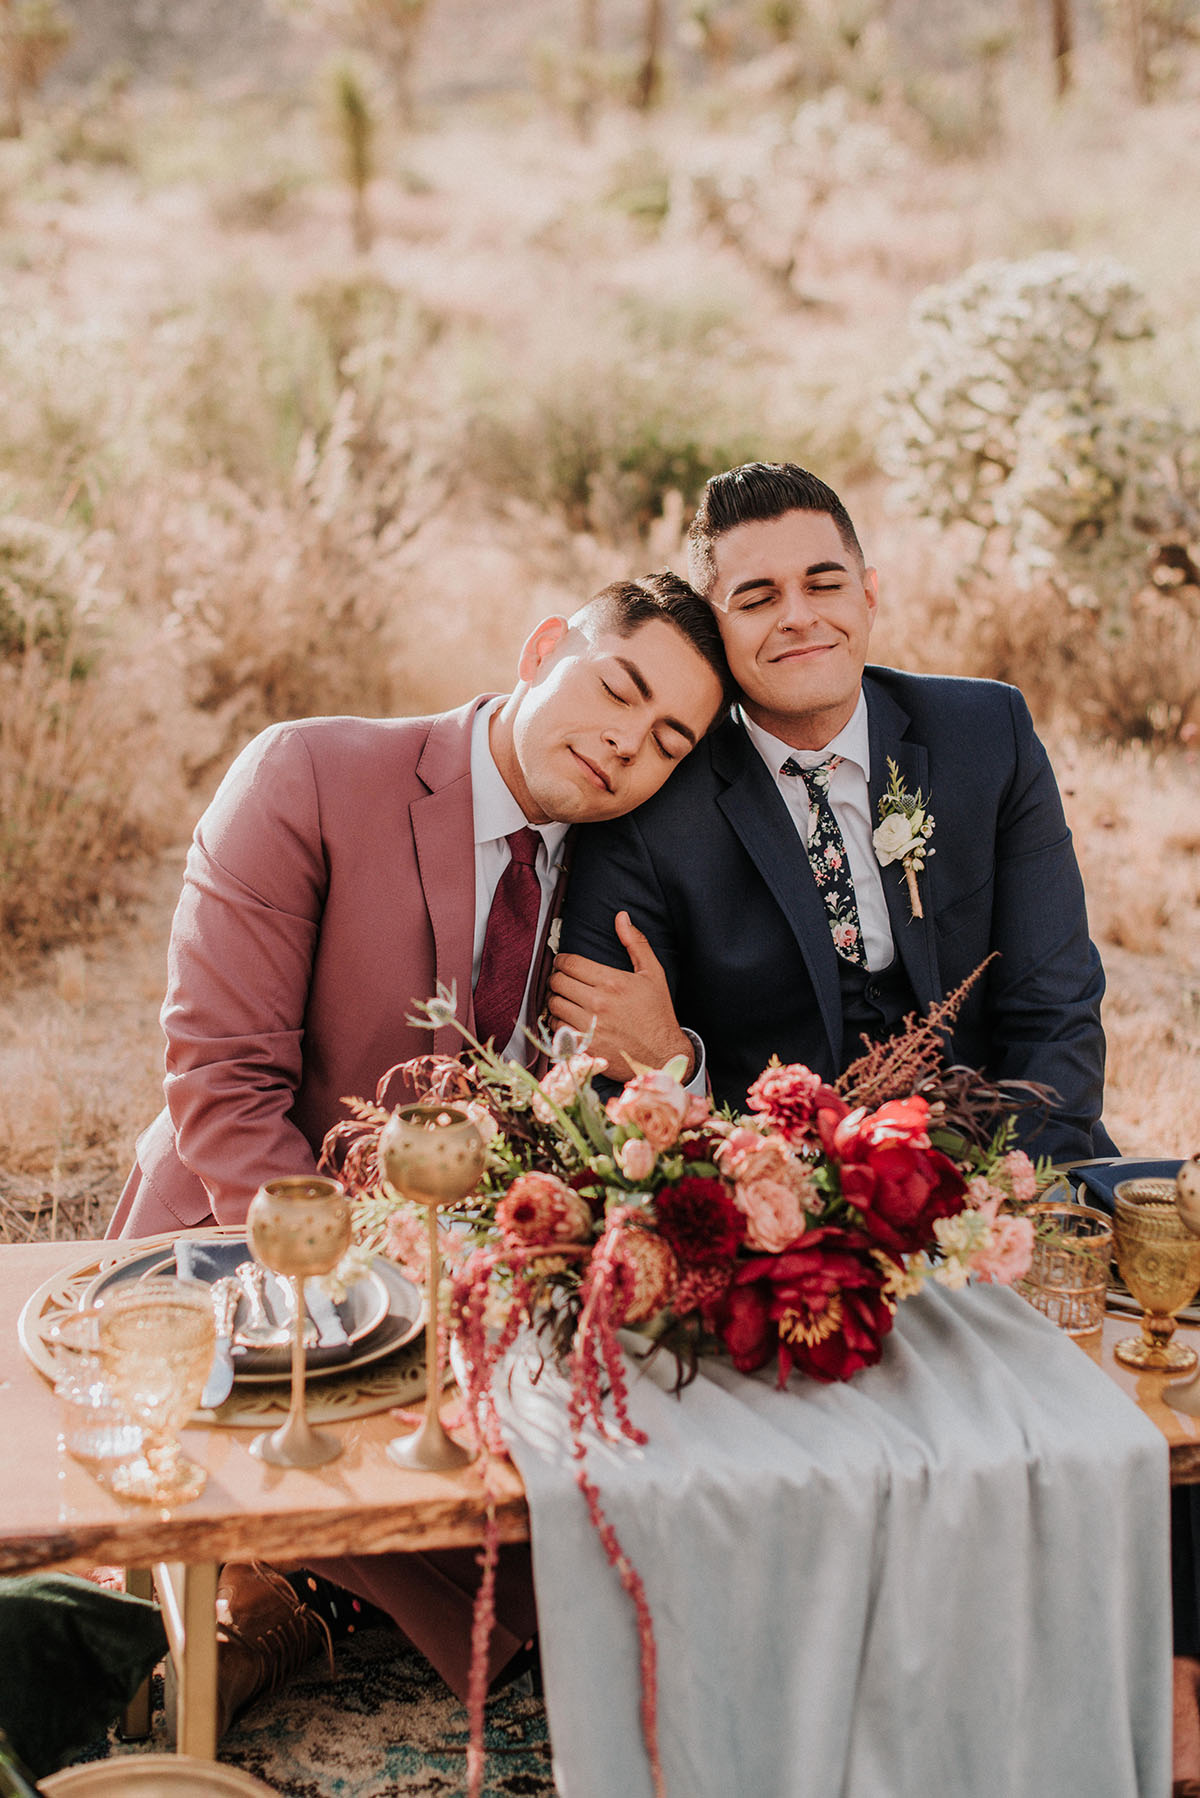 Floral bohemian elopement inspiration at Joshua Tree LGBTQ+ weddings gay wedding two grooms models National Park California